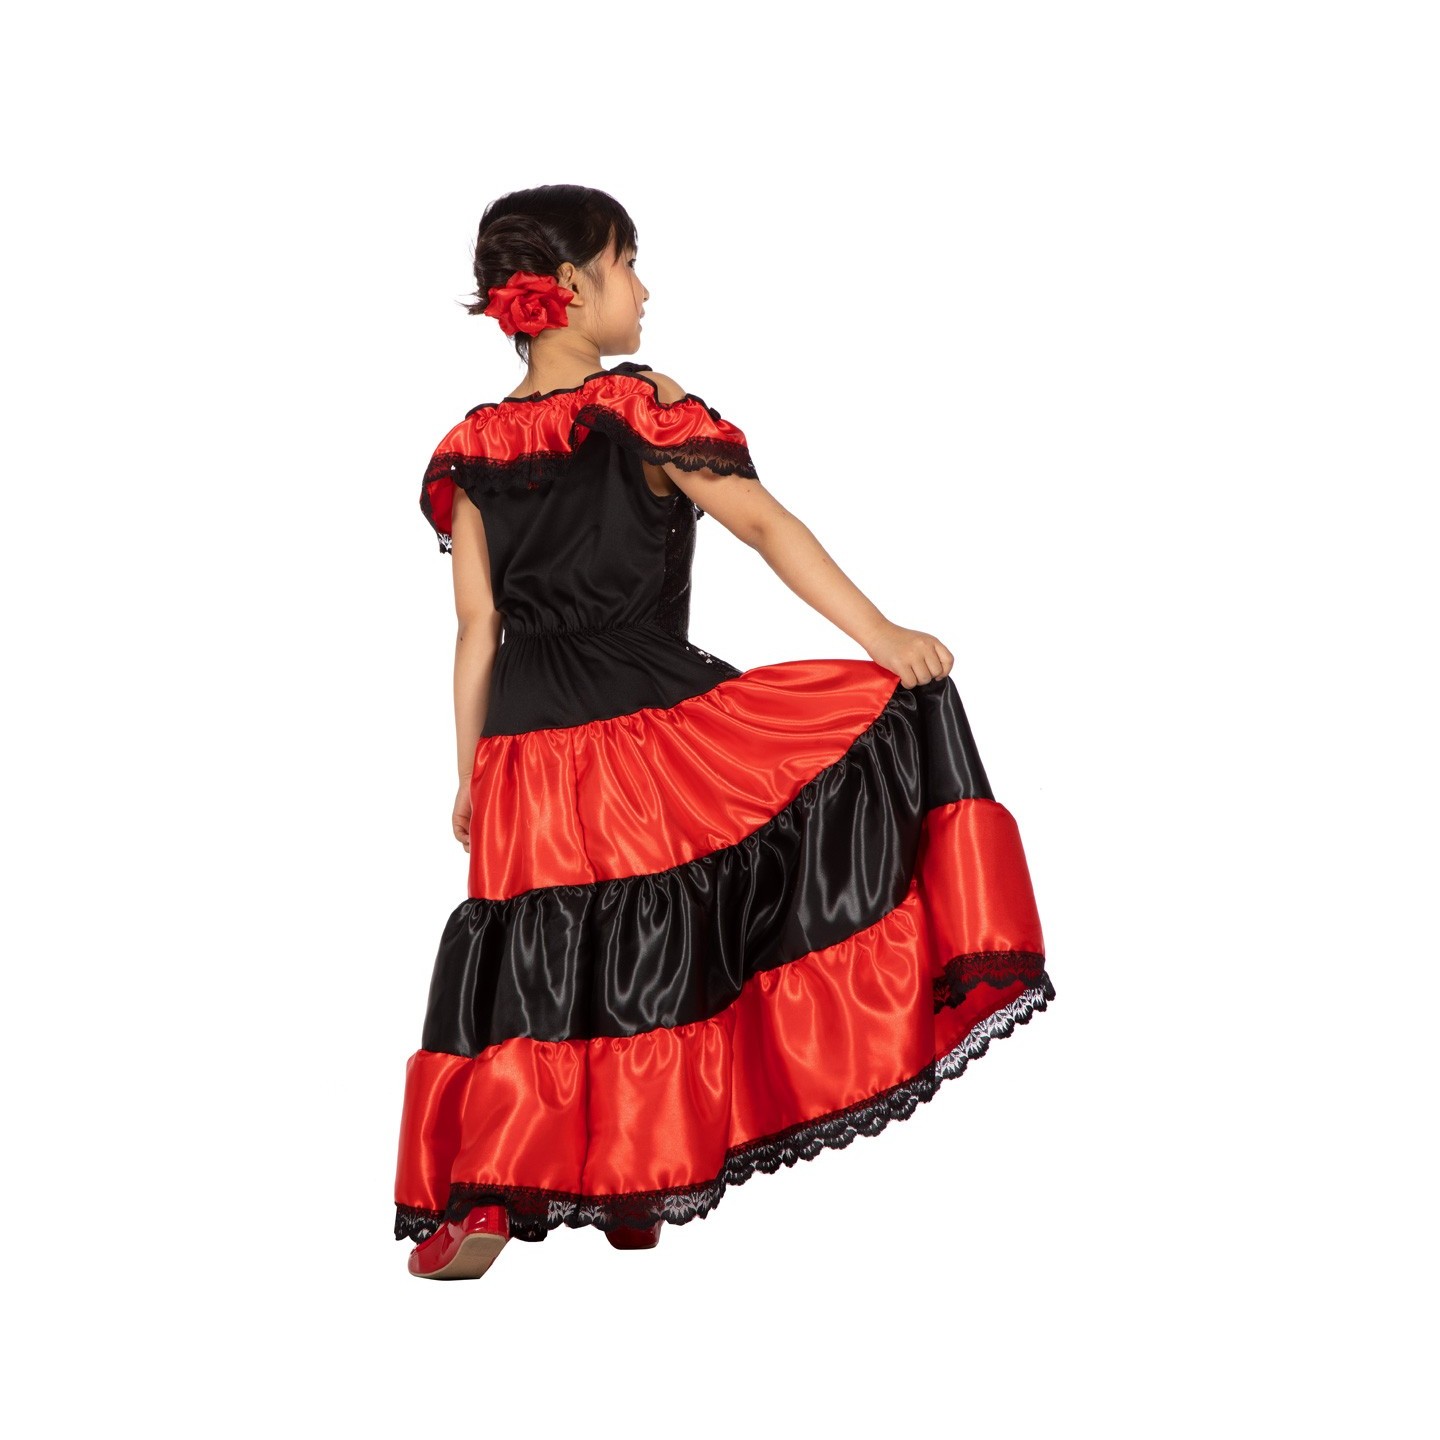 kapitalisme jongen Bediening mogelijk Spaanse jurk kind kopen ? | Jokershop.be - Carnaval kleding